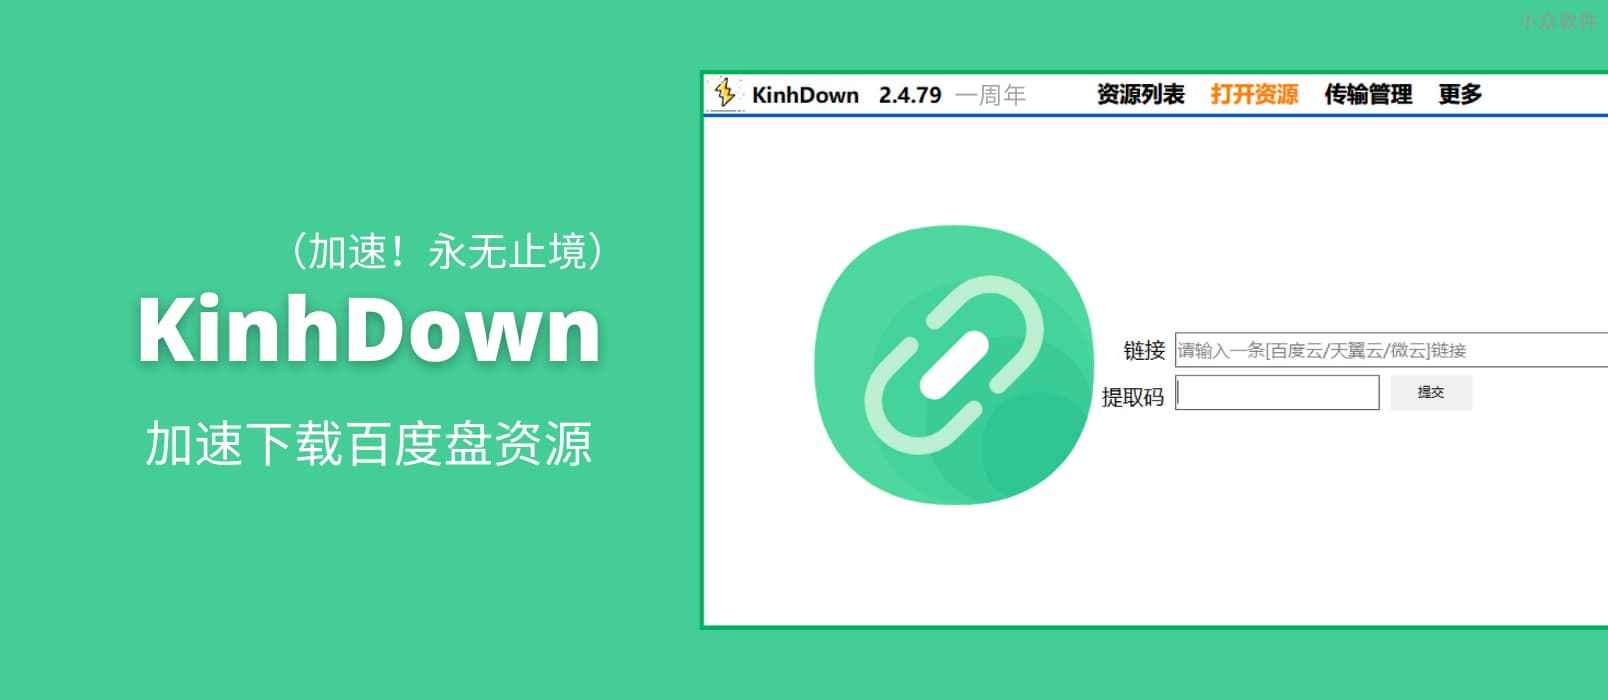 KinhDown - 加速下载百度盘资源[Windows/Android/Web]